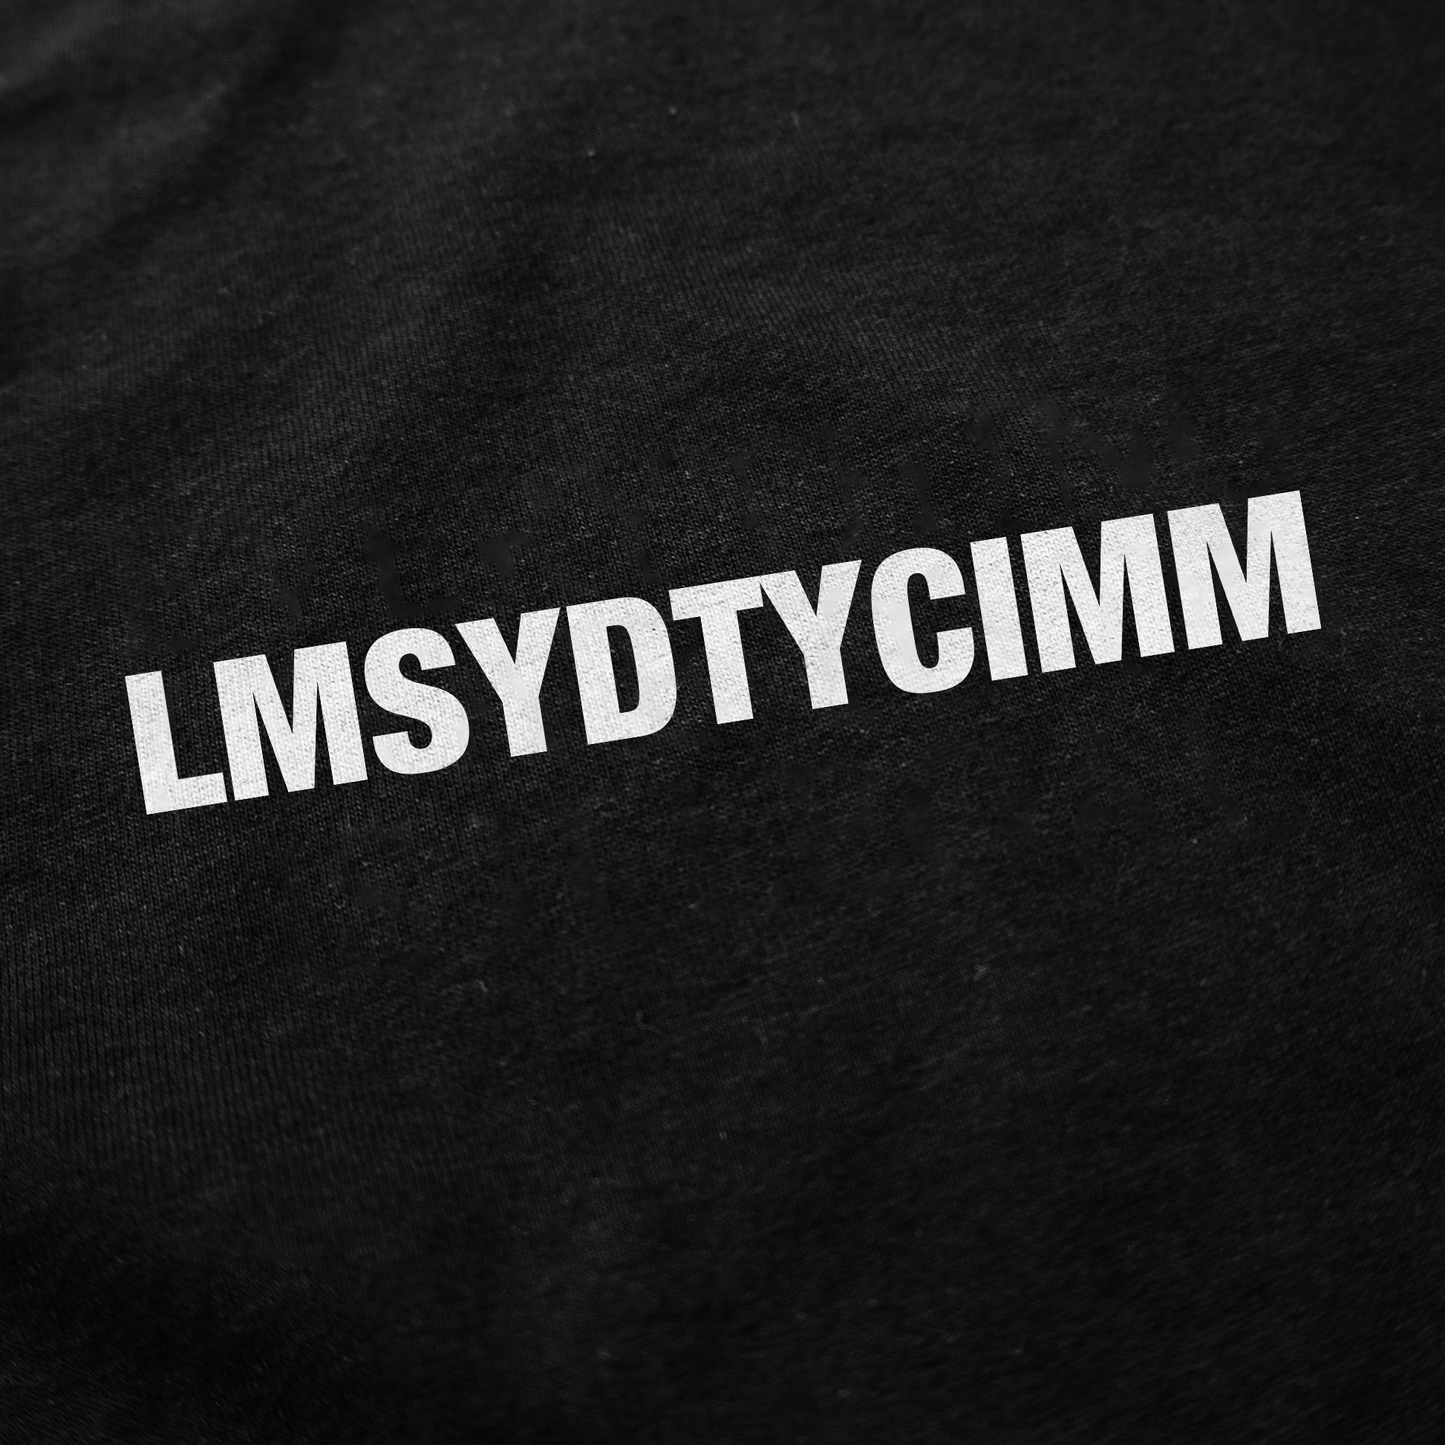 LMSYDTYCIMM T-Shirt